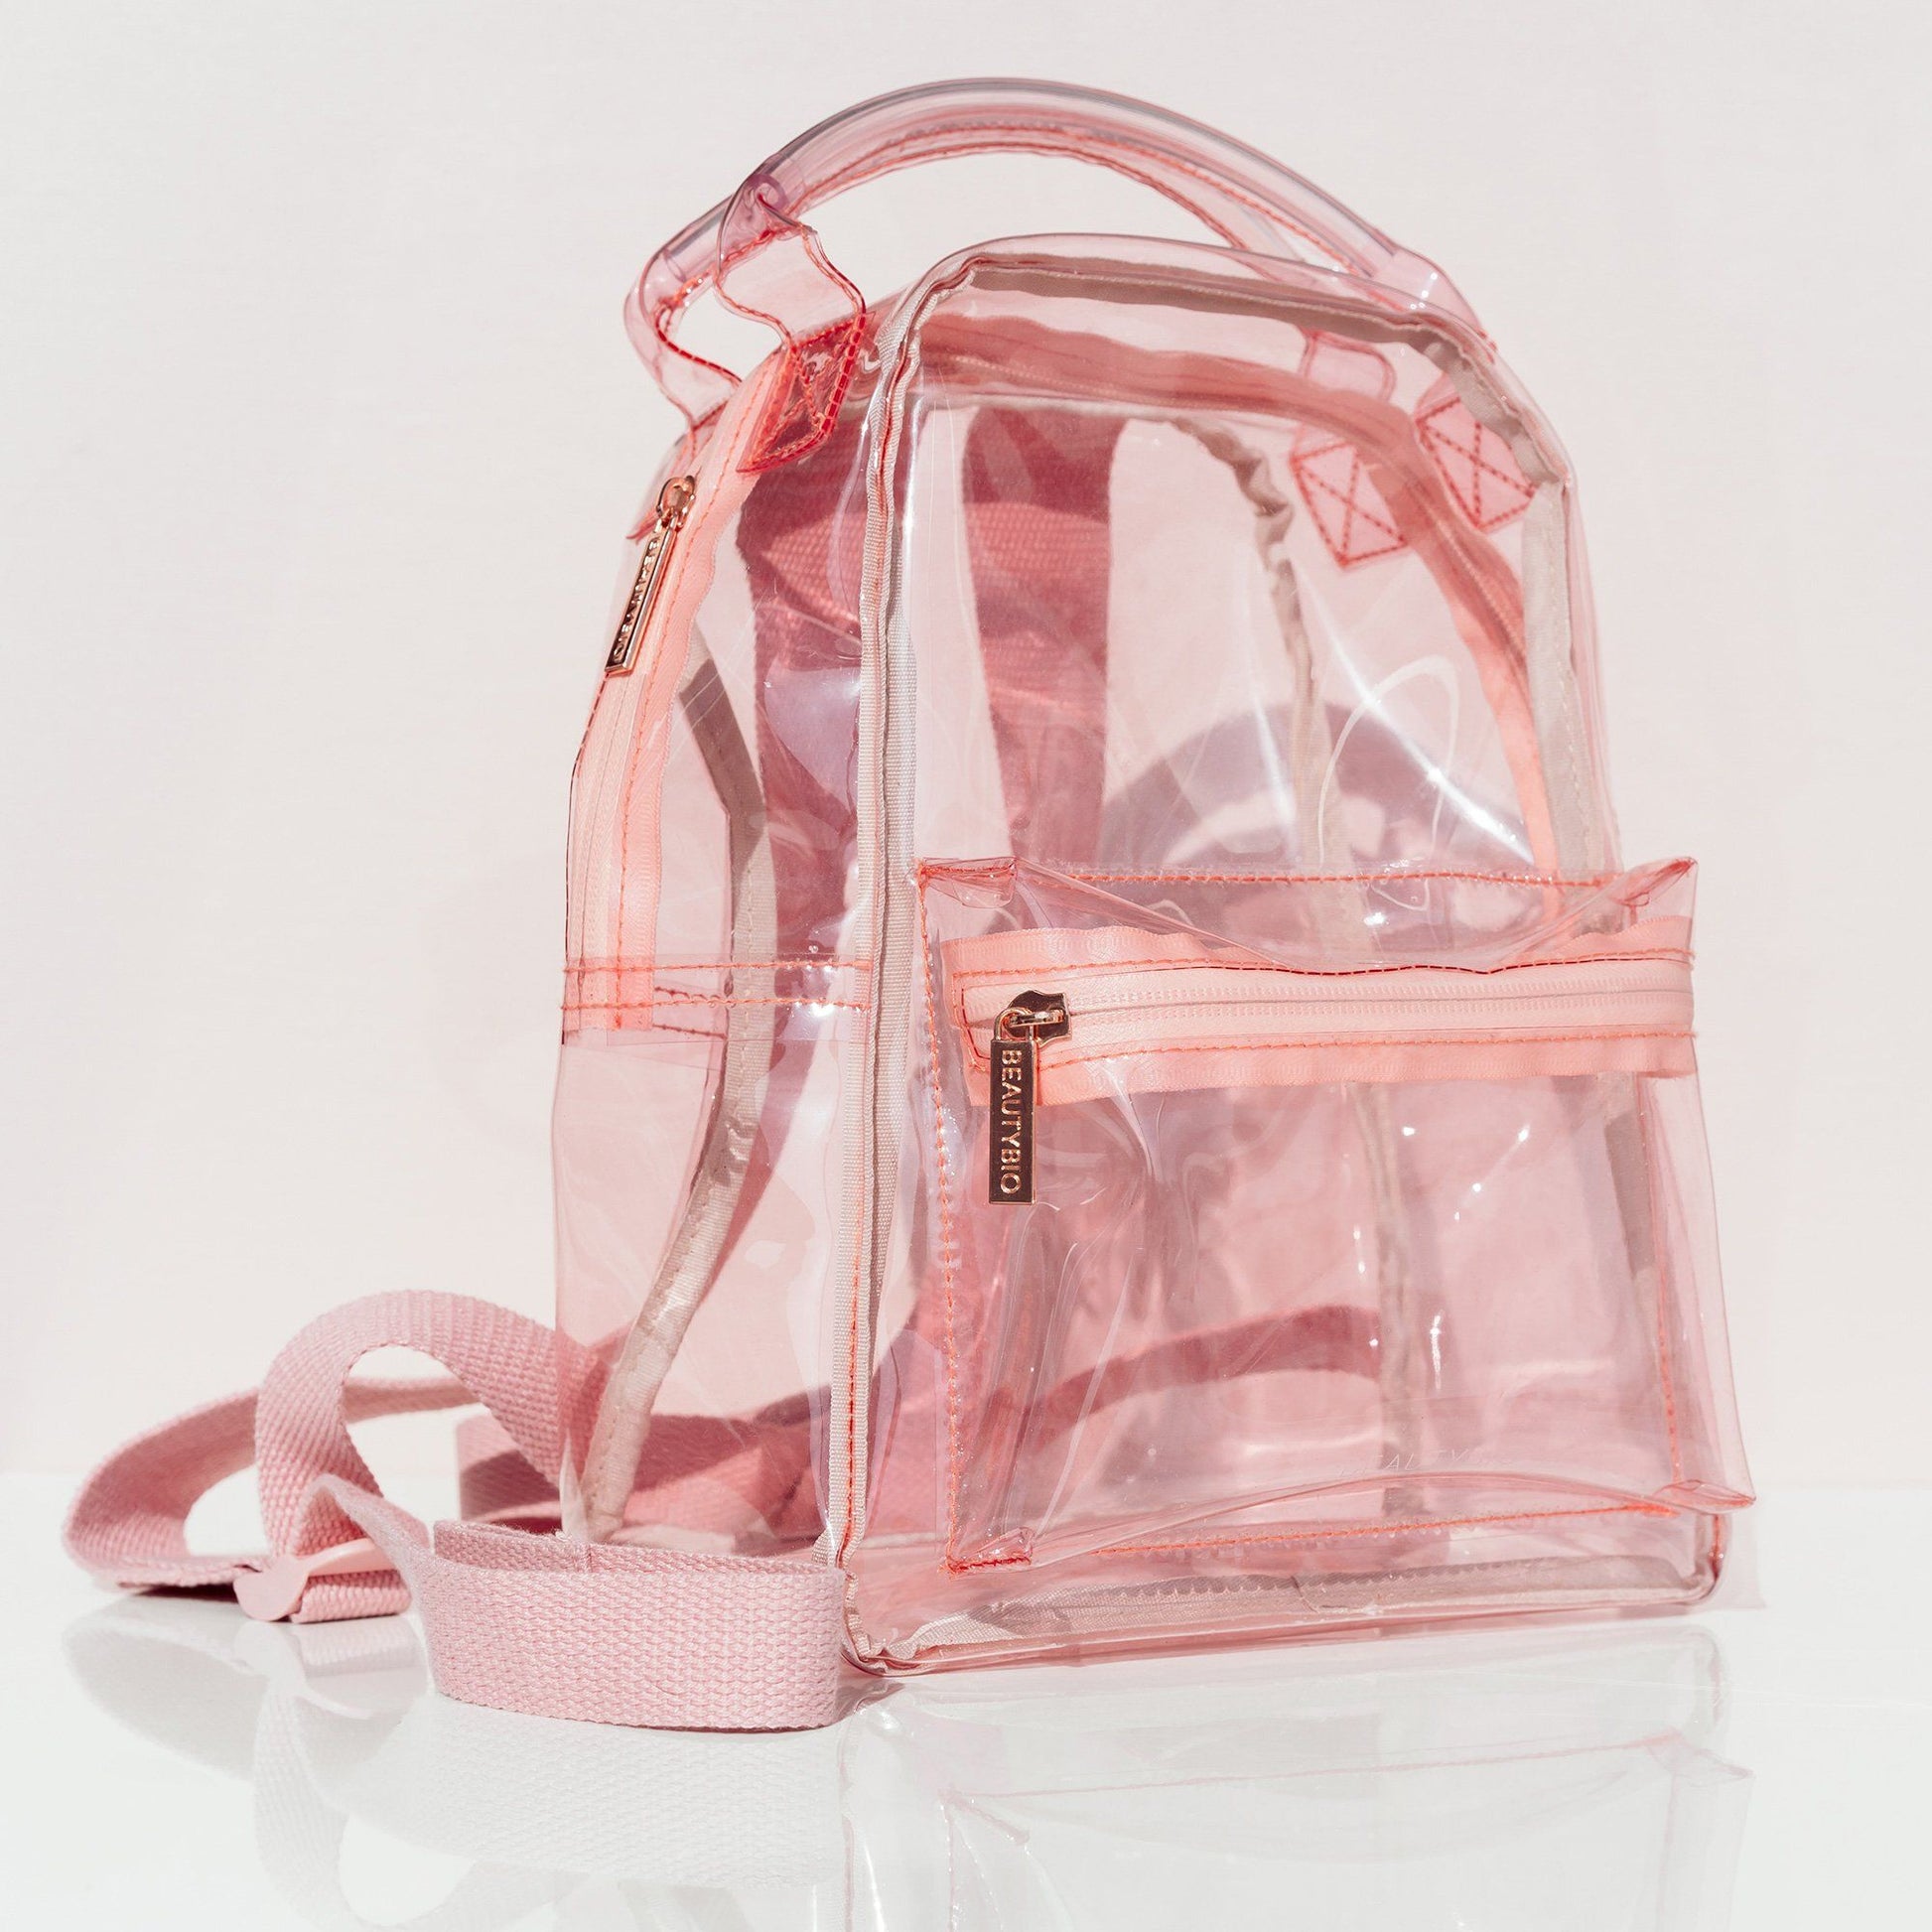 Lana Backpack Merch BeautyBio 